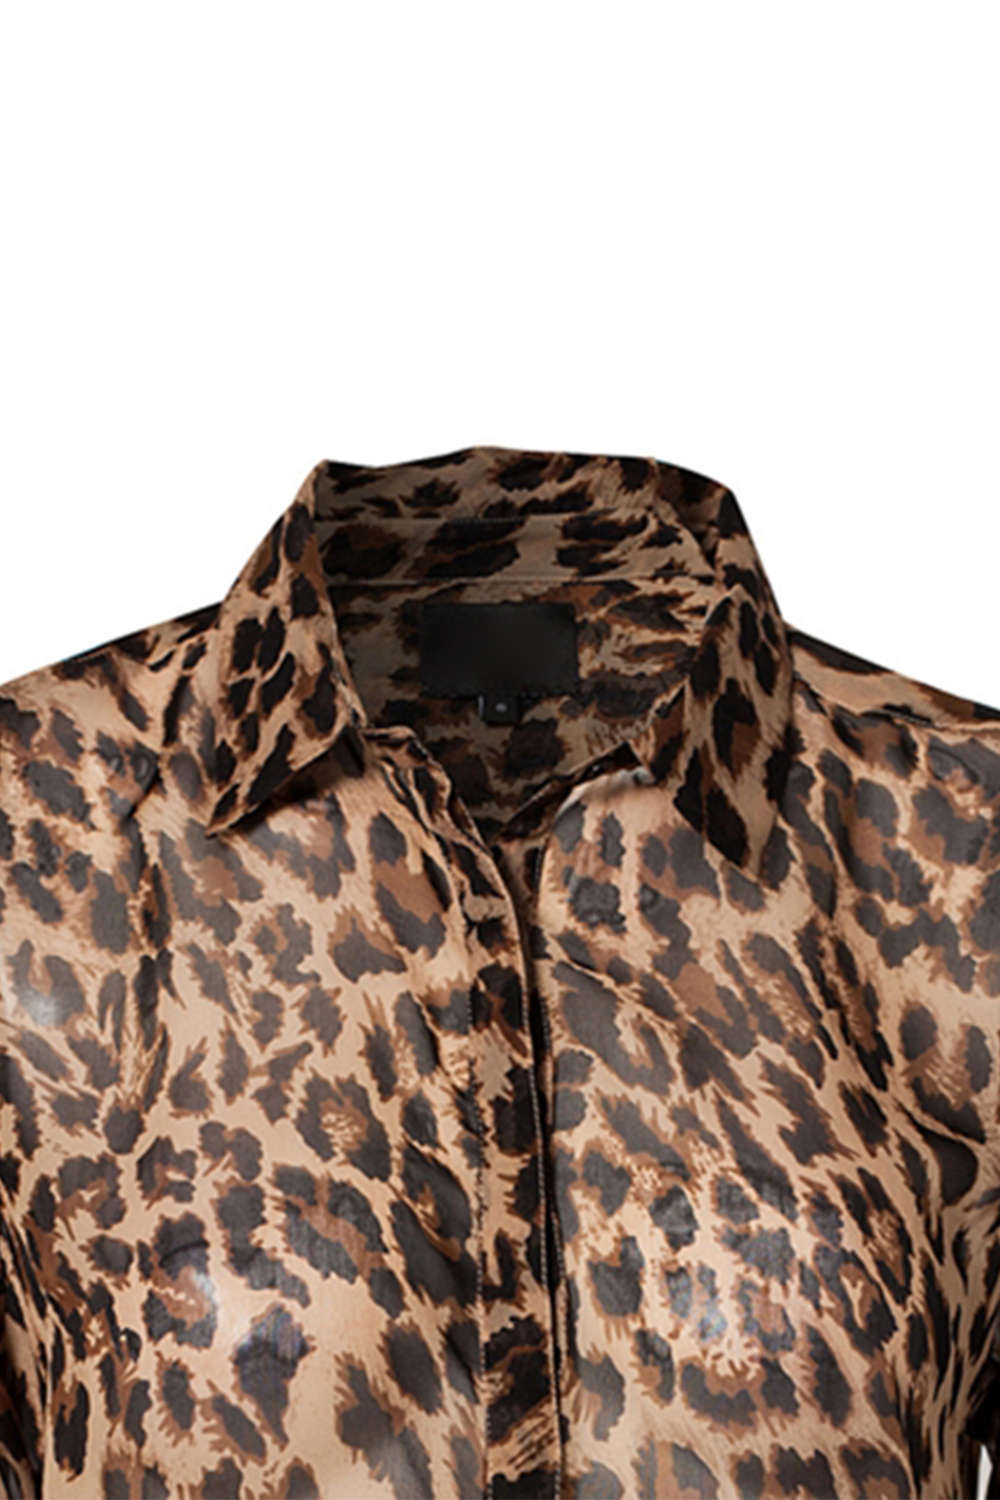 Iyasson Leopard Print Long Sleeve Casual Chiffon Blouse